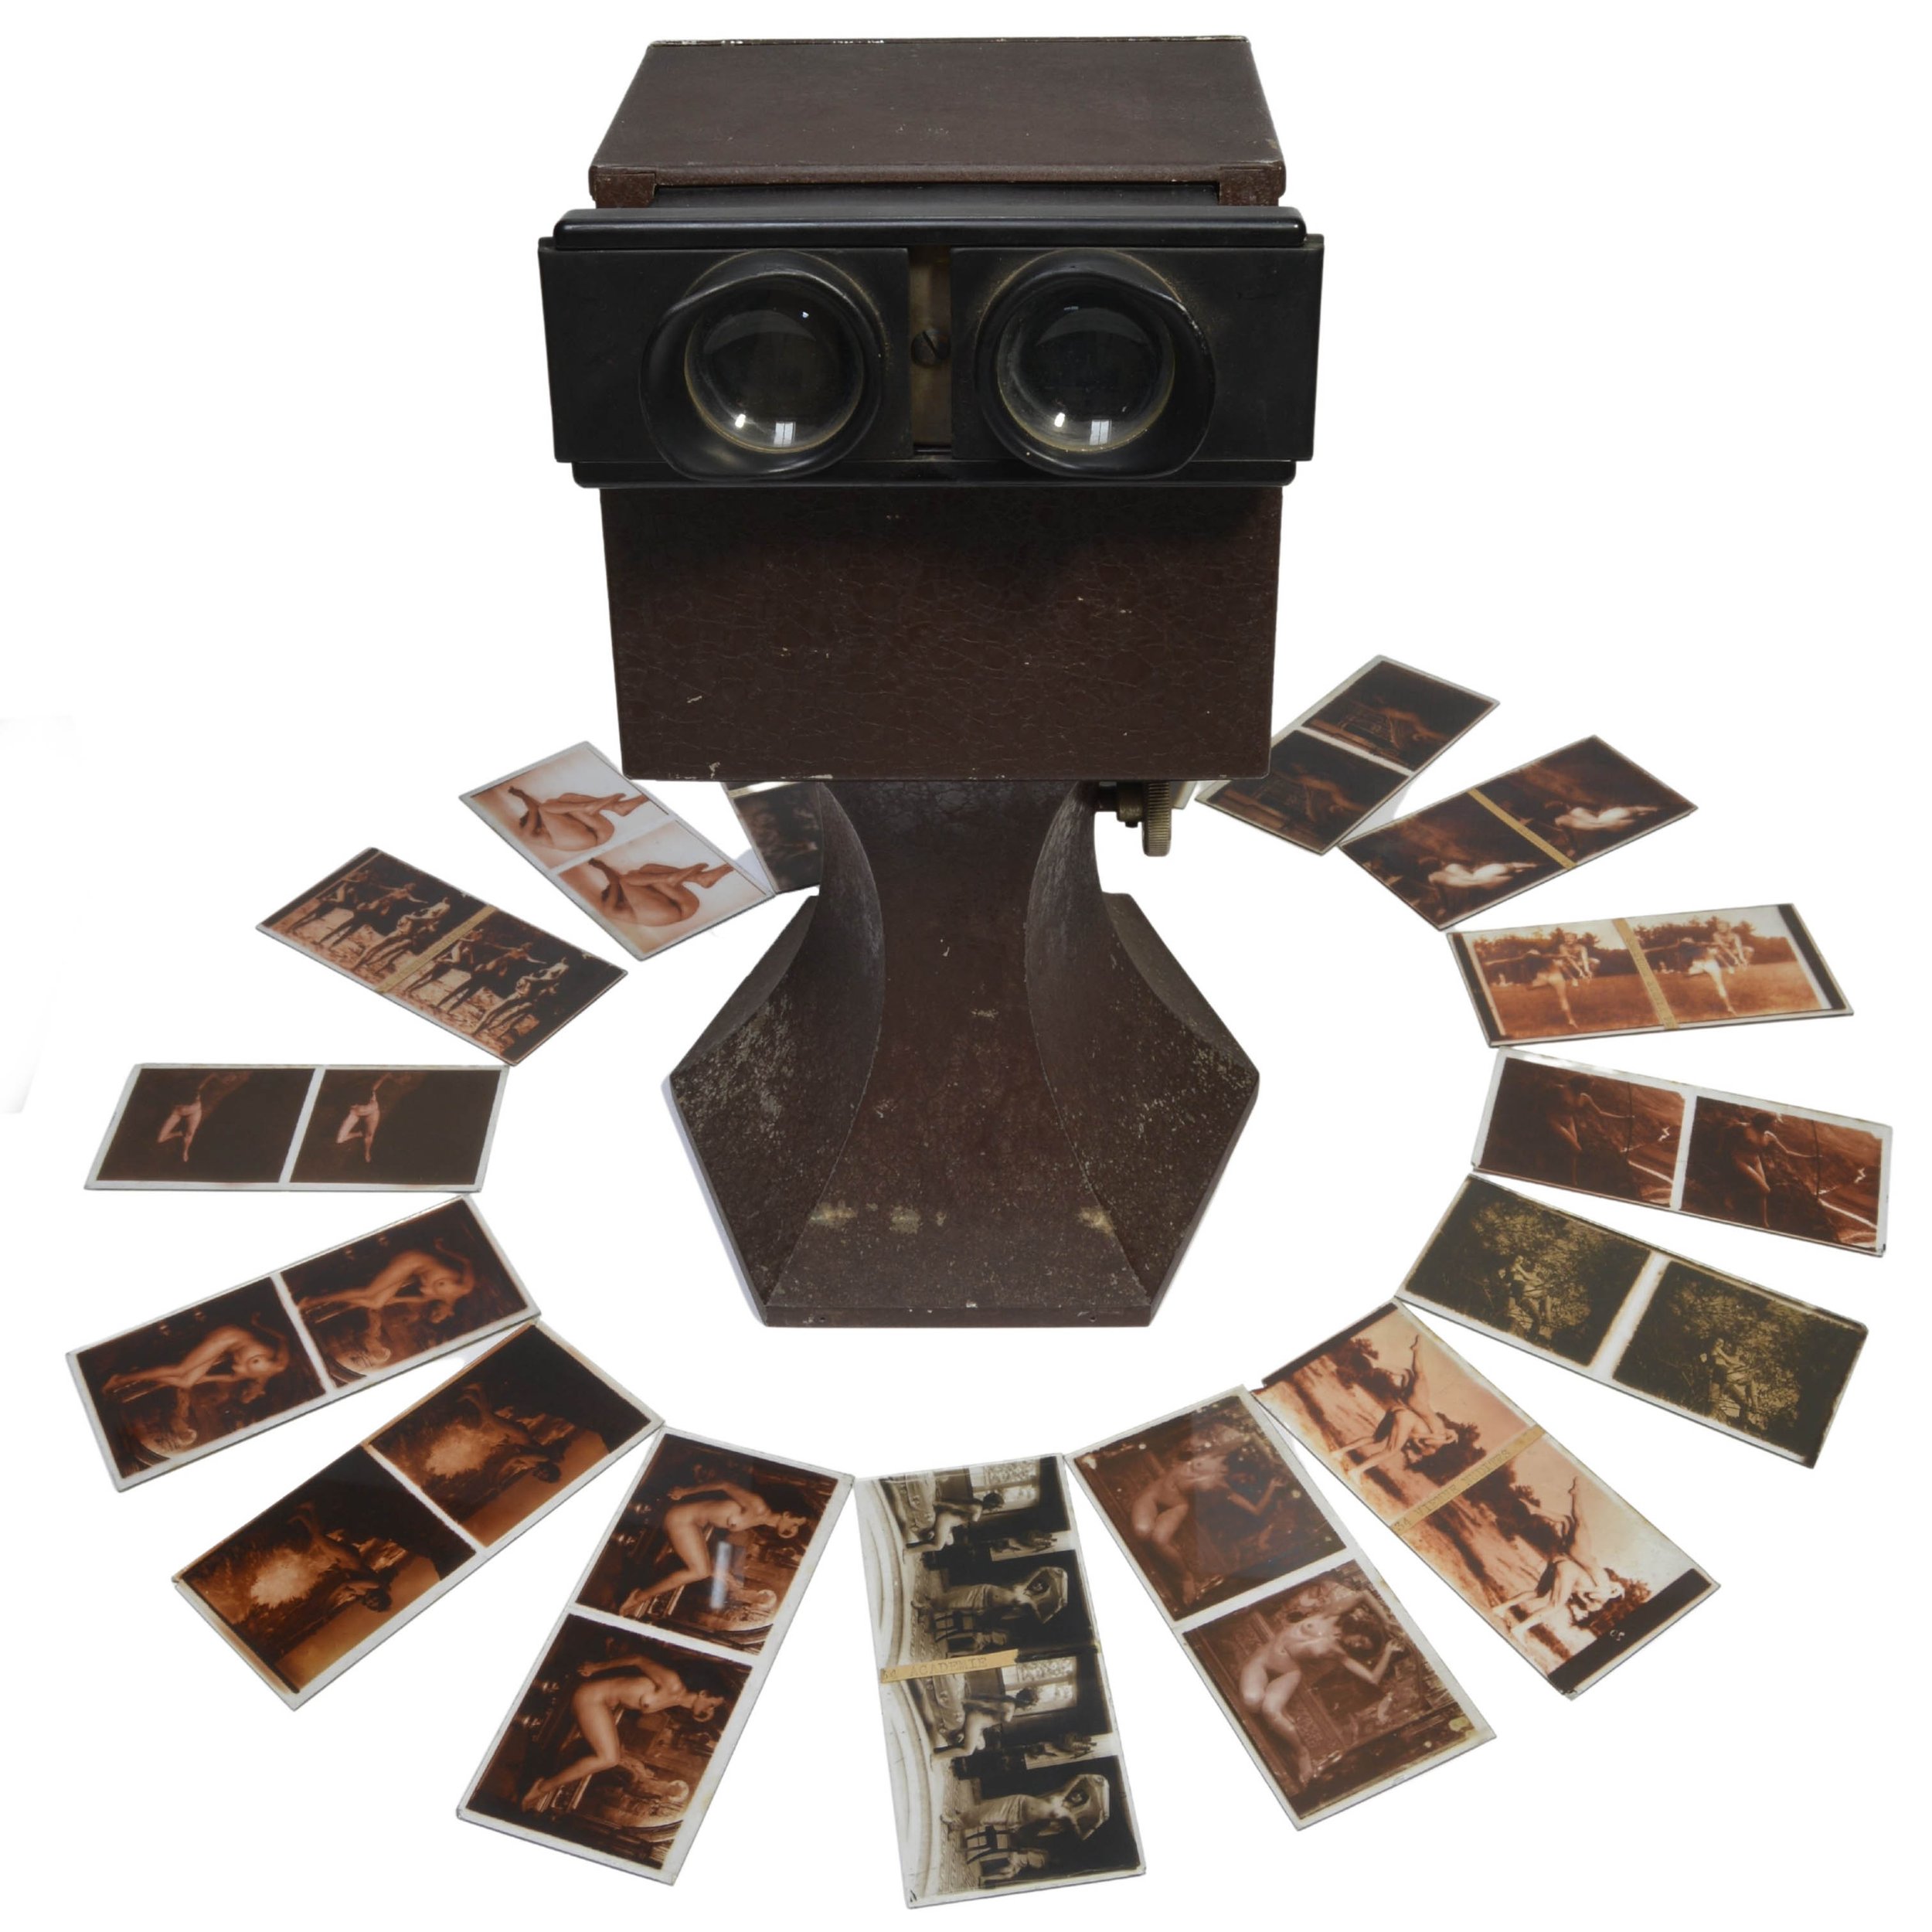 Gaumont of Paris tabletop stereoscope